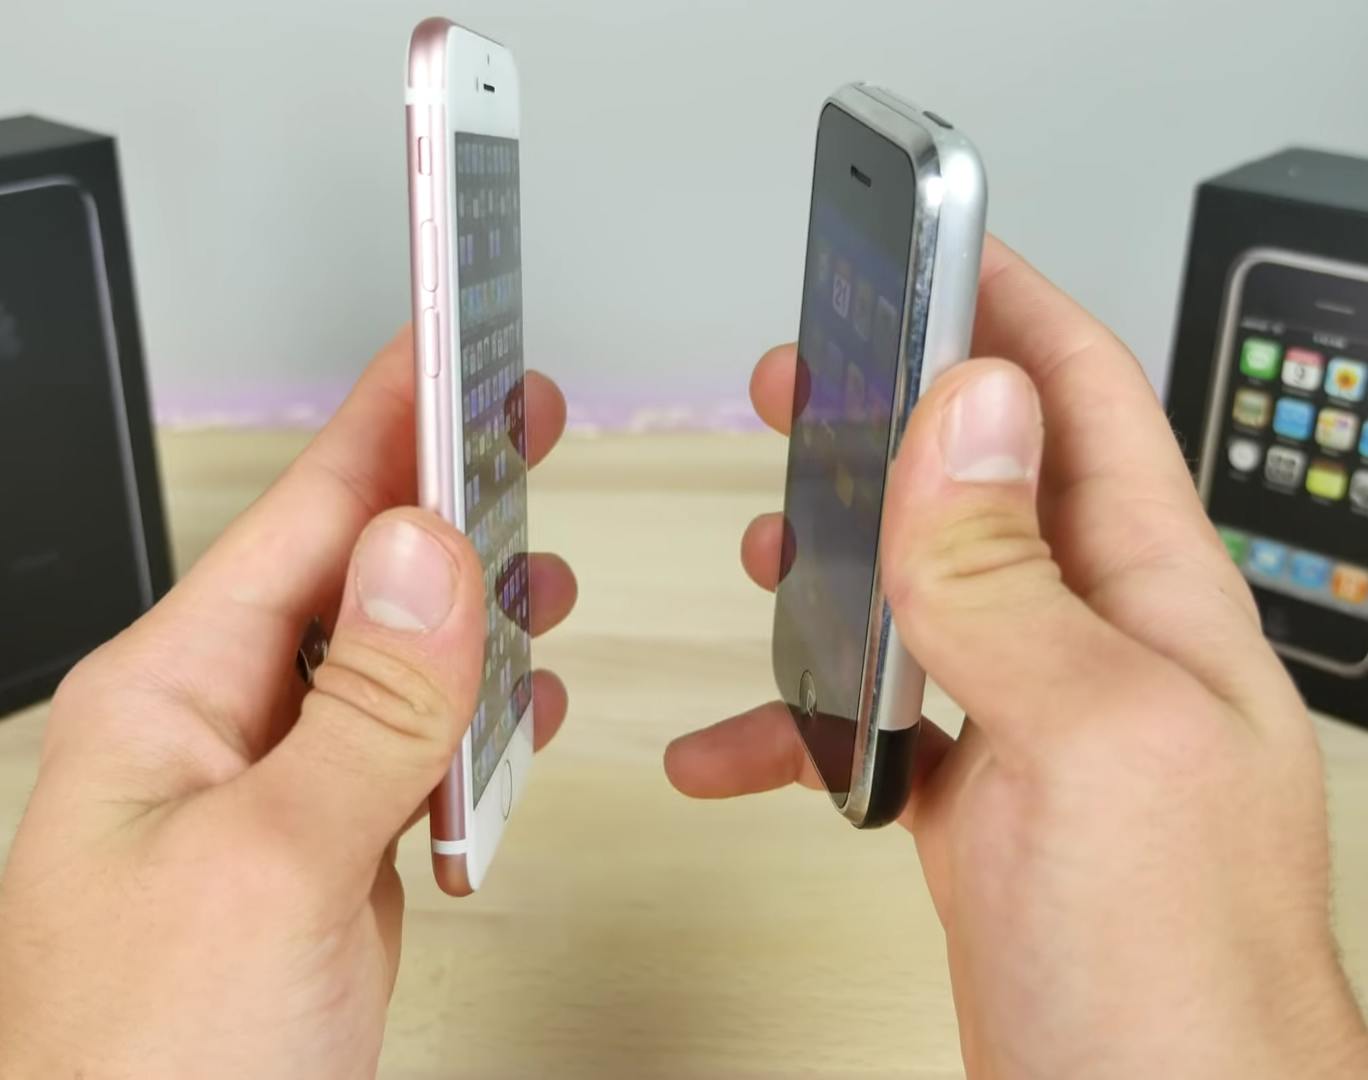 apple comparison iphone 7 vs iPhone 2G